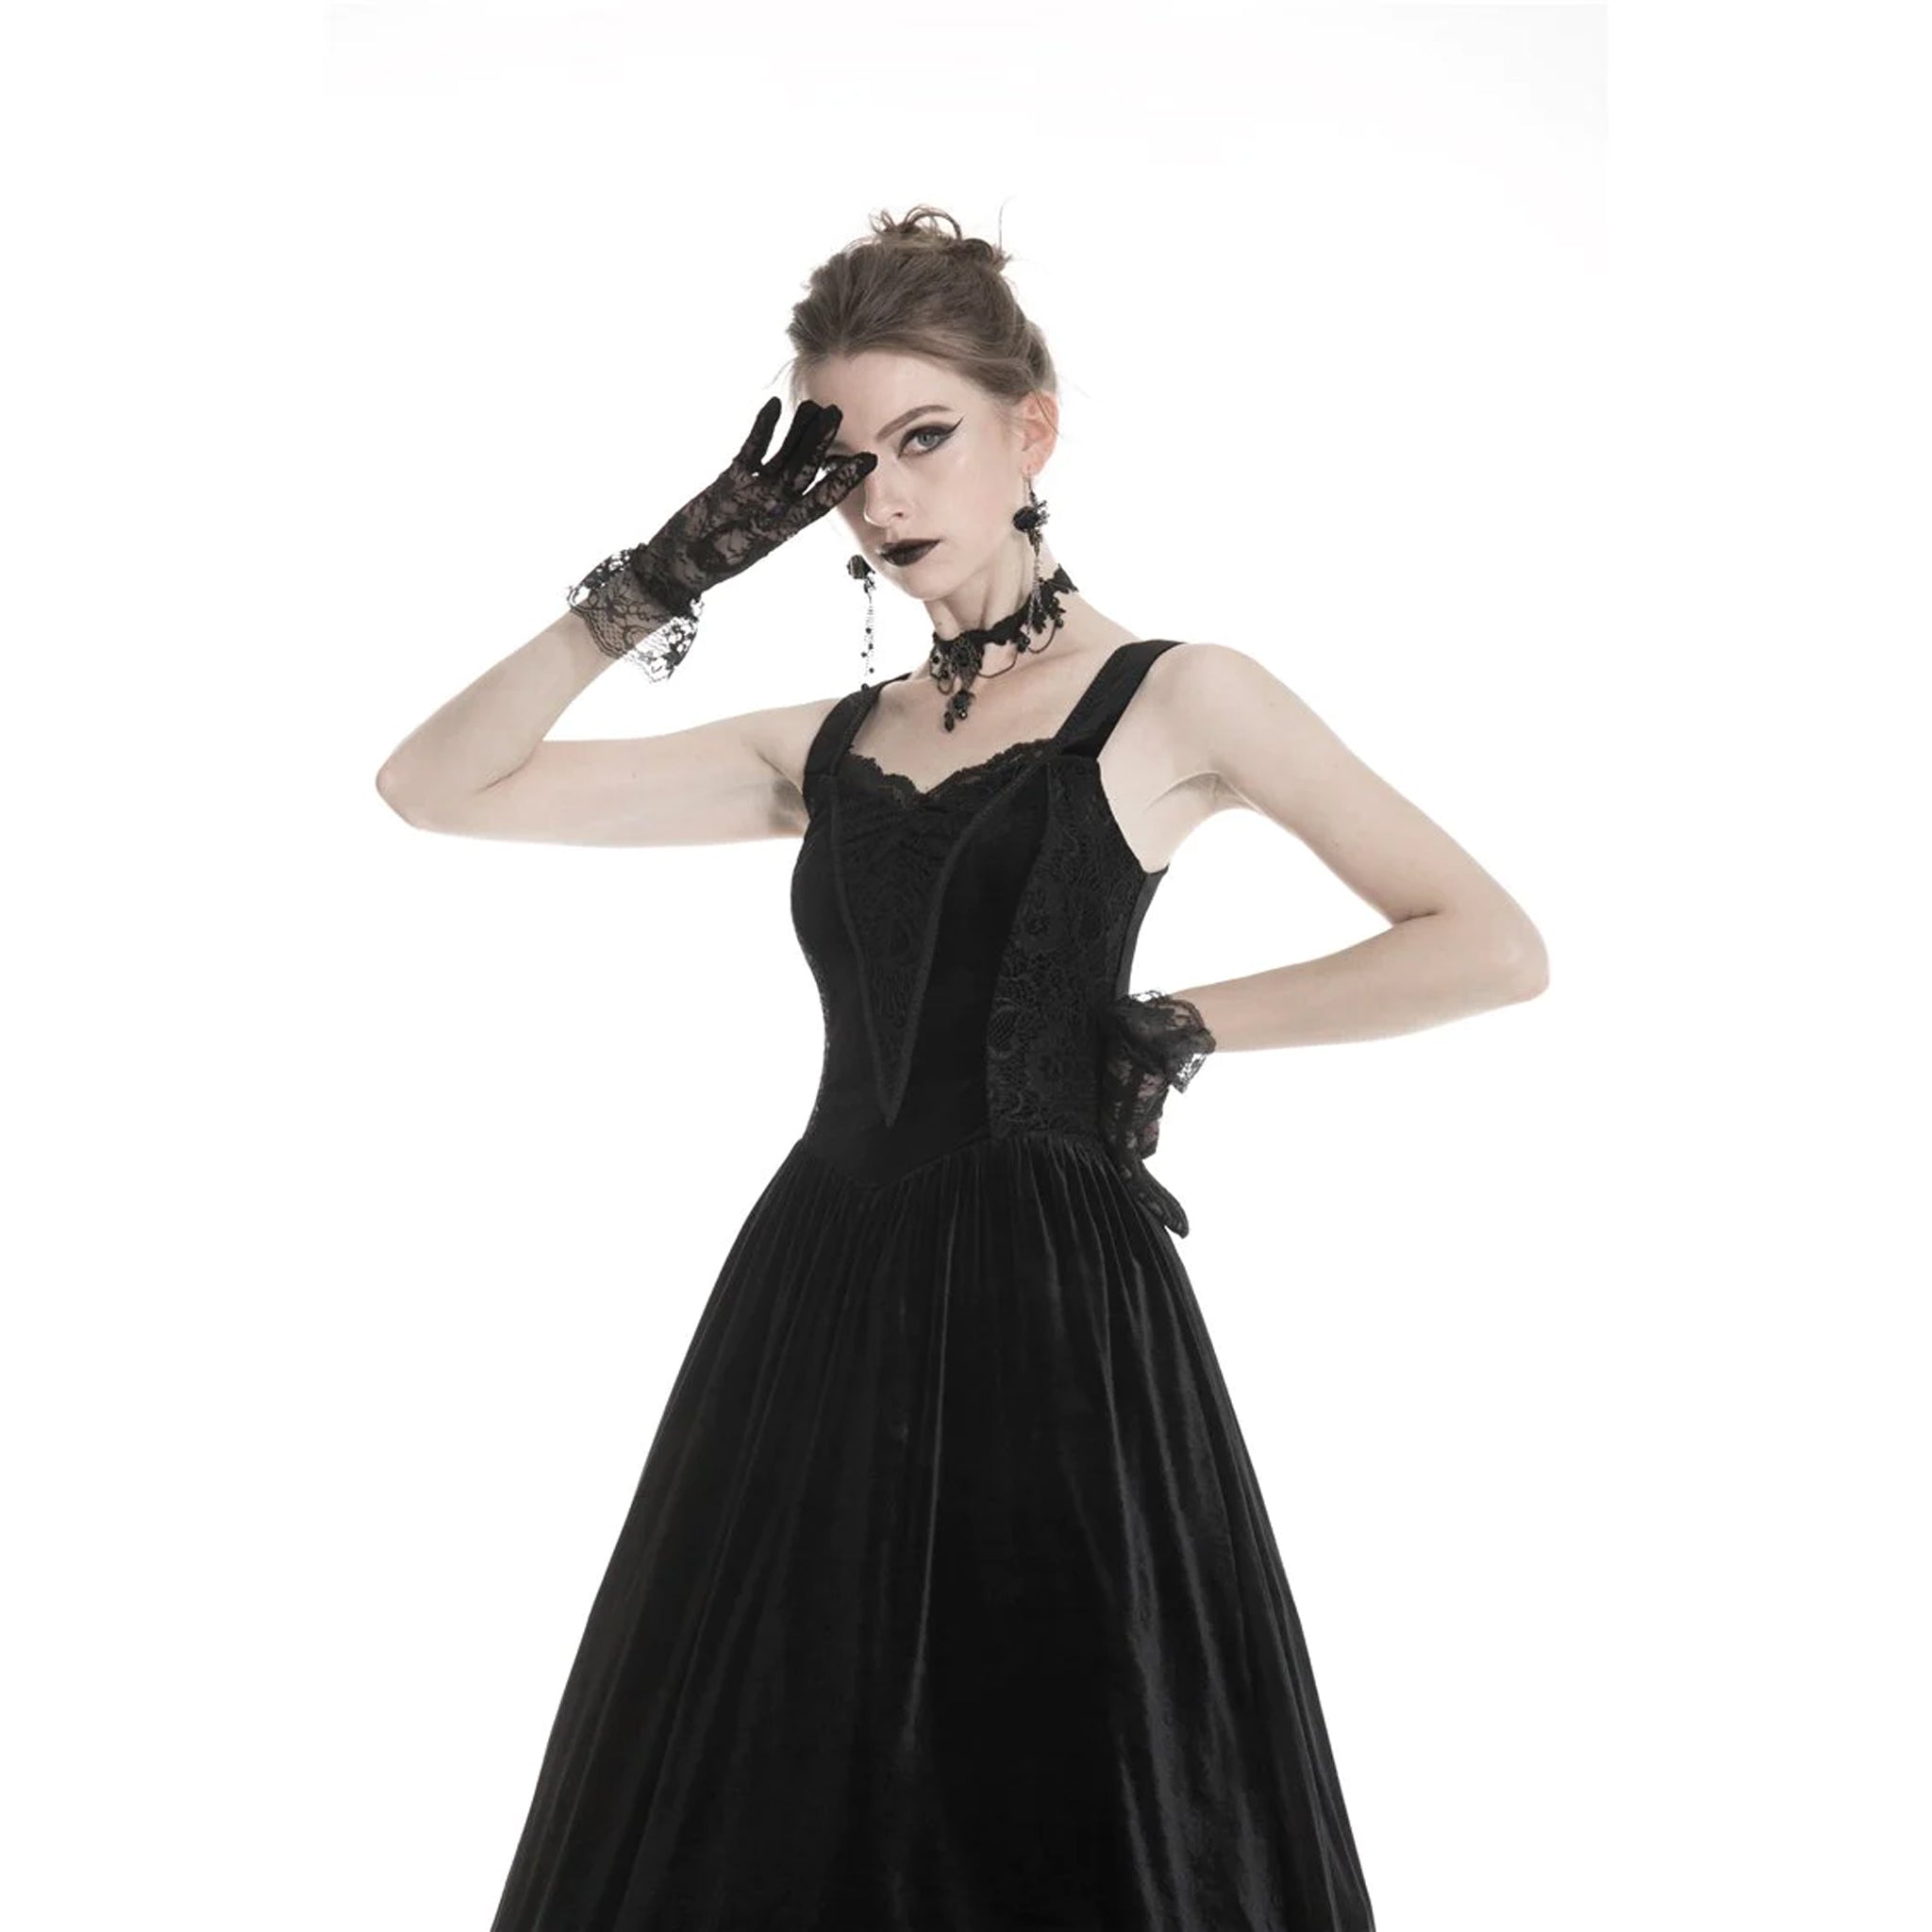 Sasha's Noir Gown